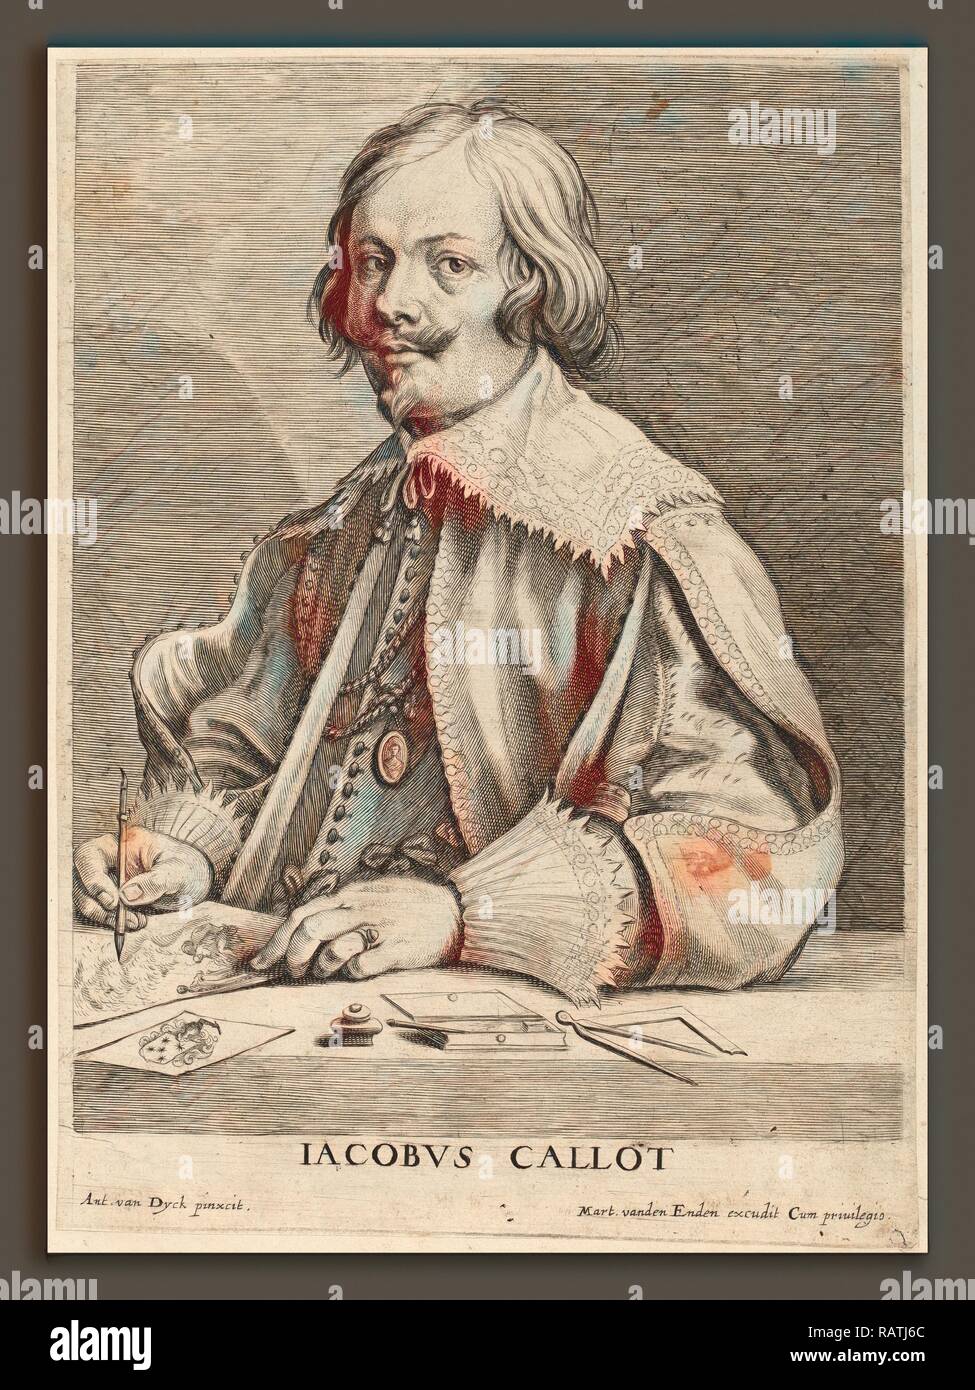 Emil Lucas Vorsterman dopo Sir Anthony van Dyck (fiammingo, 1595 - 1675), Jacques Callot, incisione. Reinventato Foto Stock